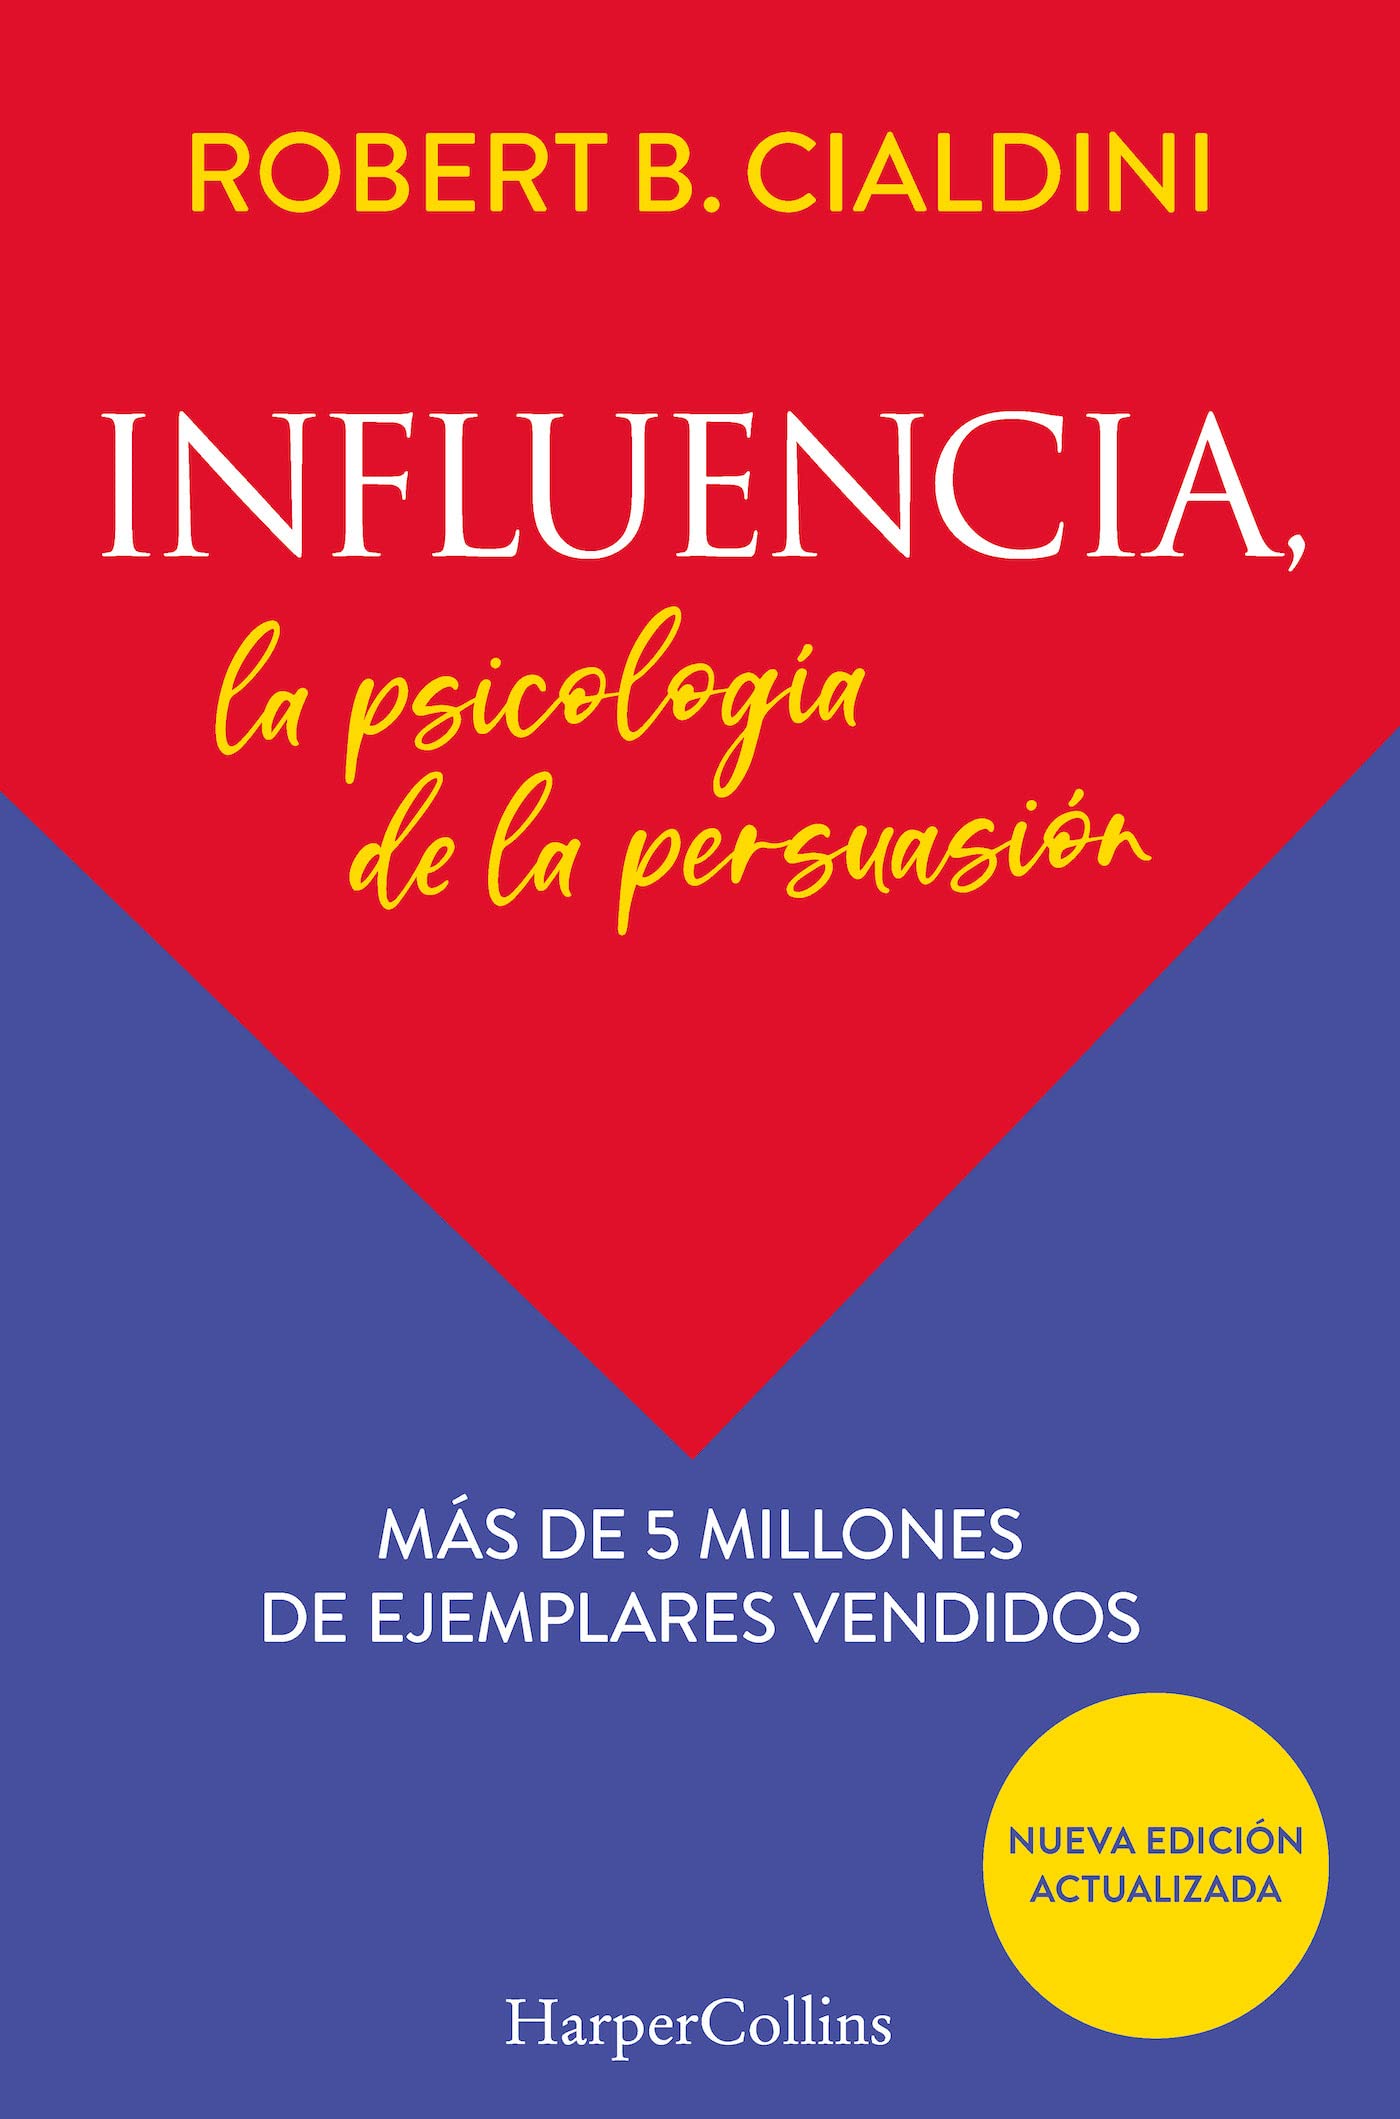 Influencia (Influence, The Psychology of Persuasion - Spanish Edition): La psicología de la persuasión (The Persuasion Psychology)